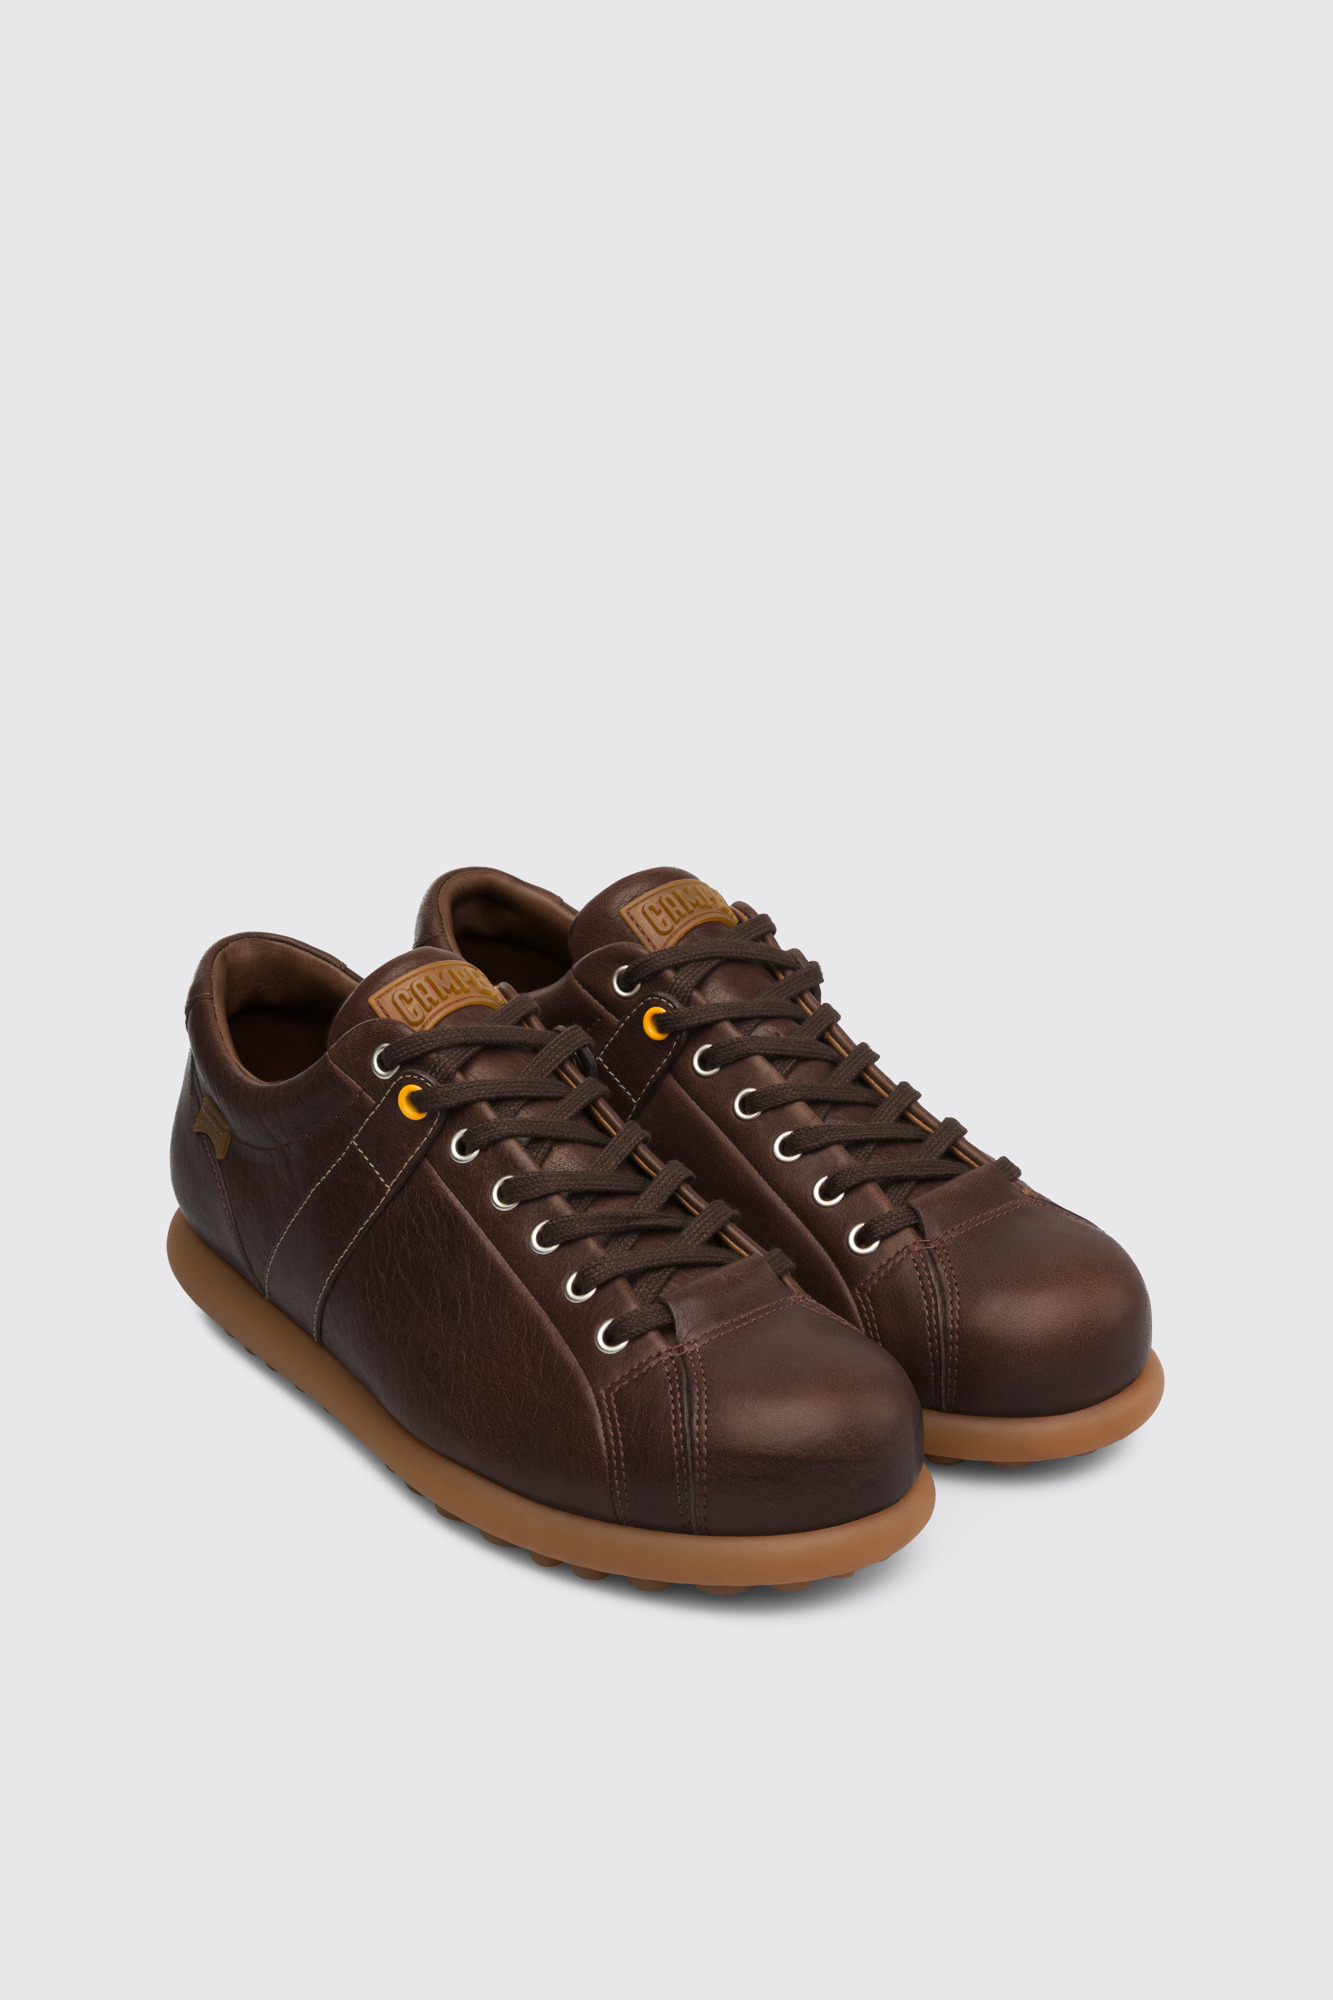 Camper Mens Pelotas Ariel 17408-086 Mens Brown Leather Shoes Trainers Size 7-12 